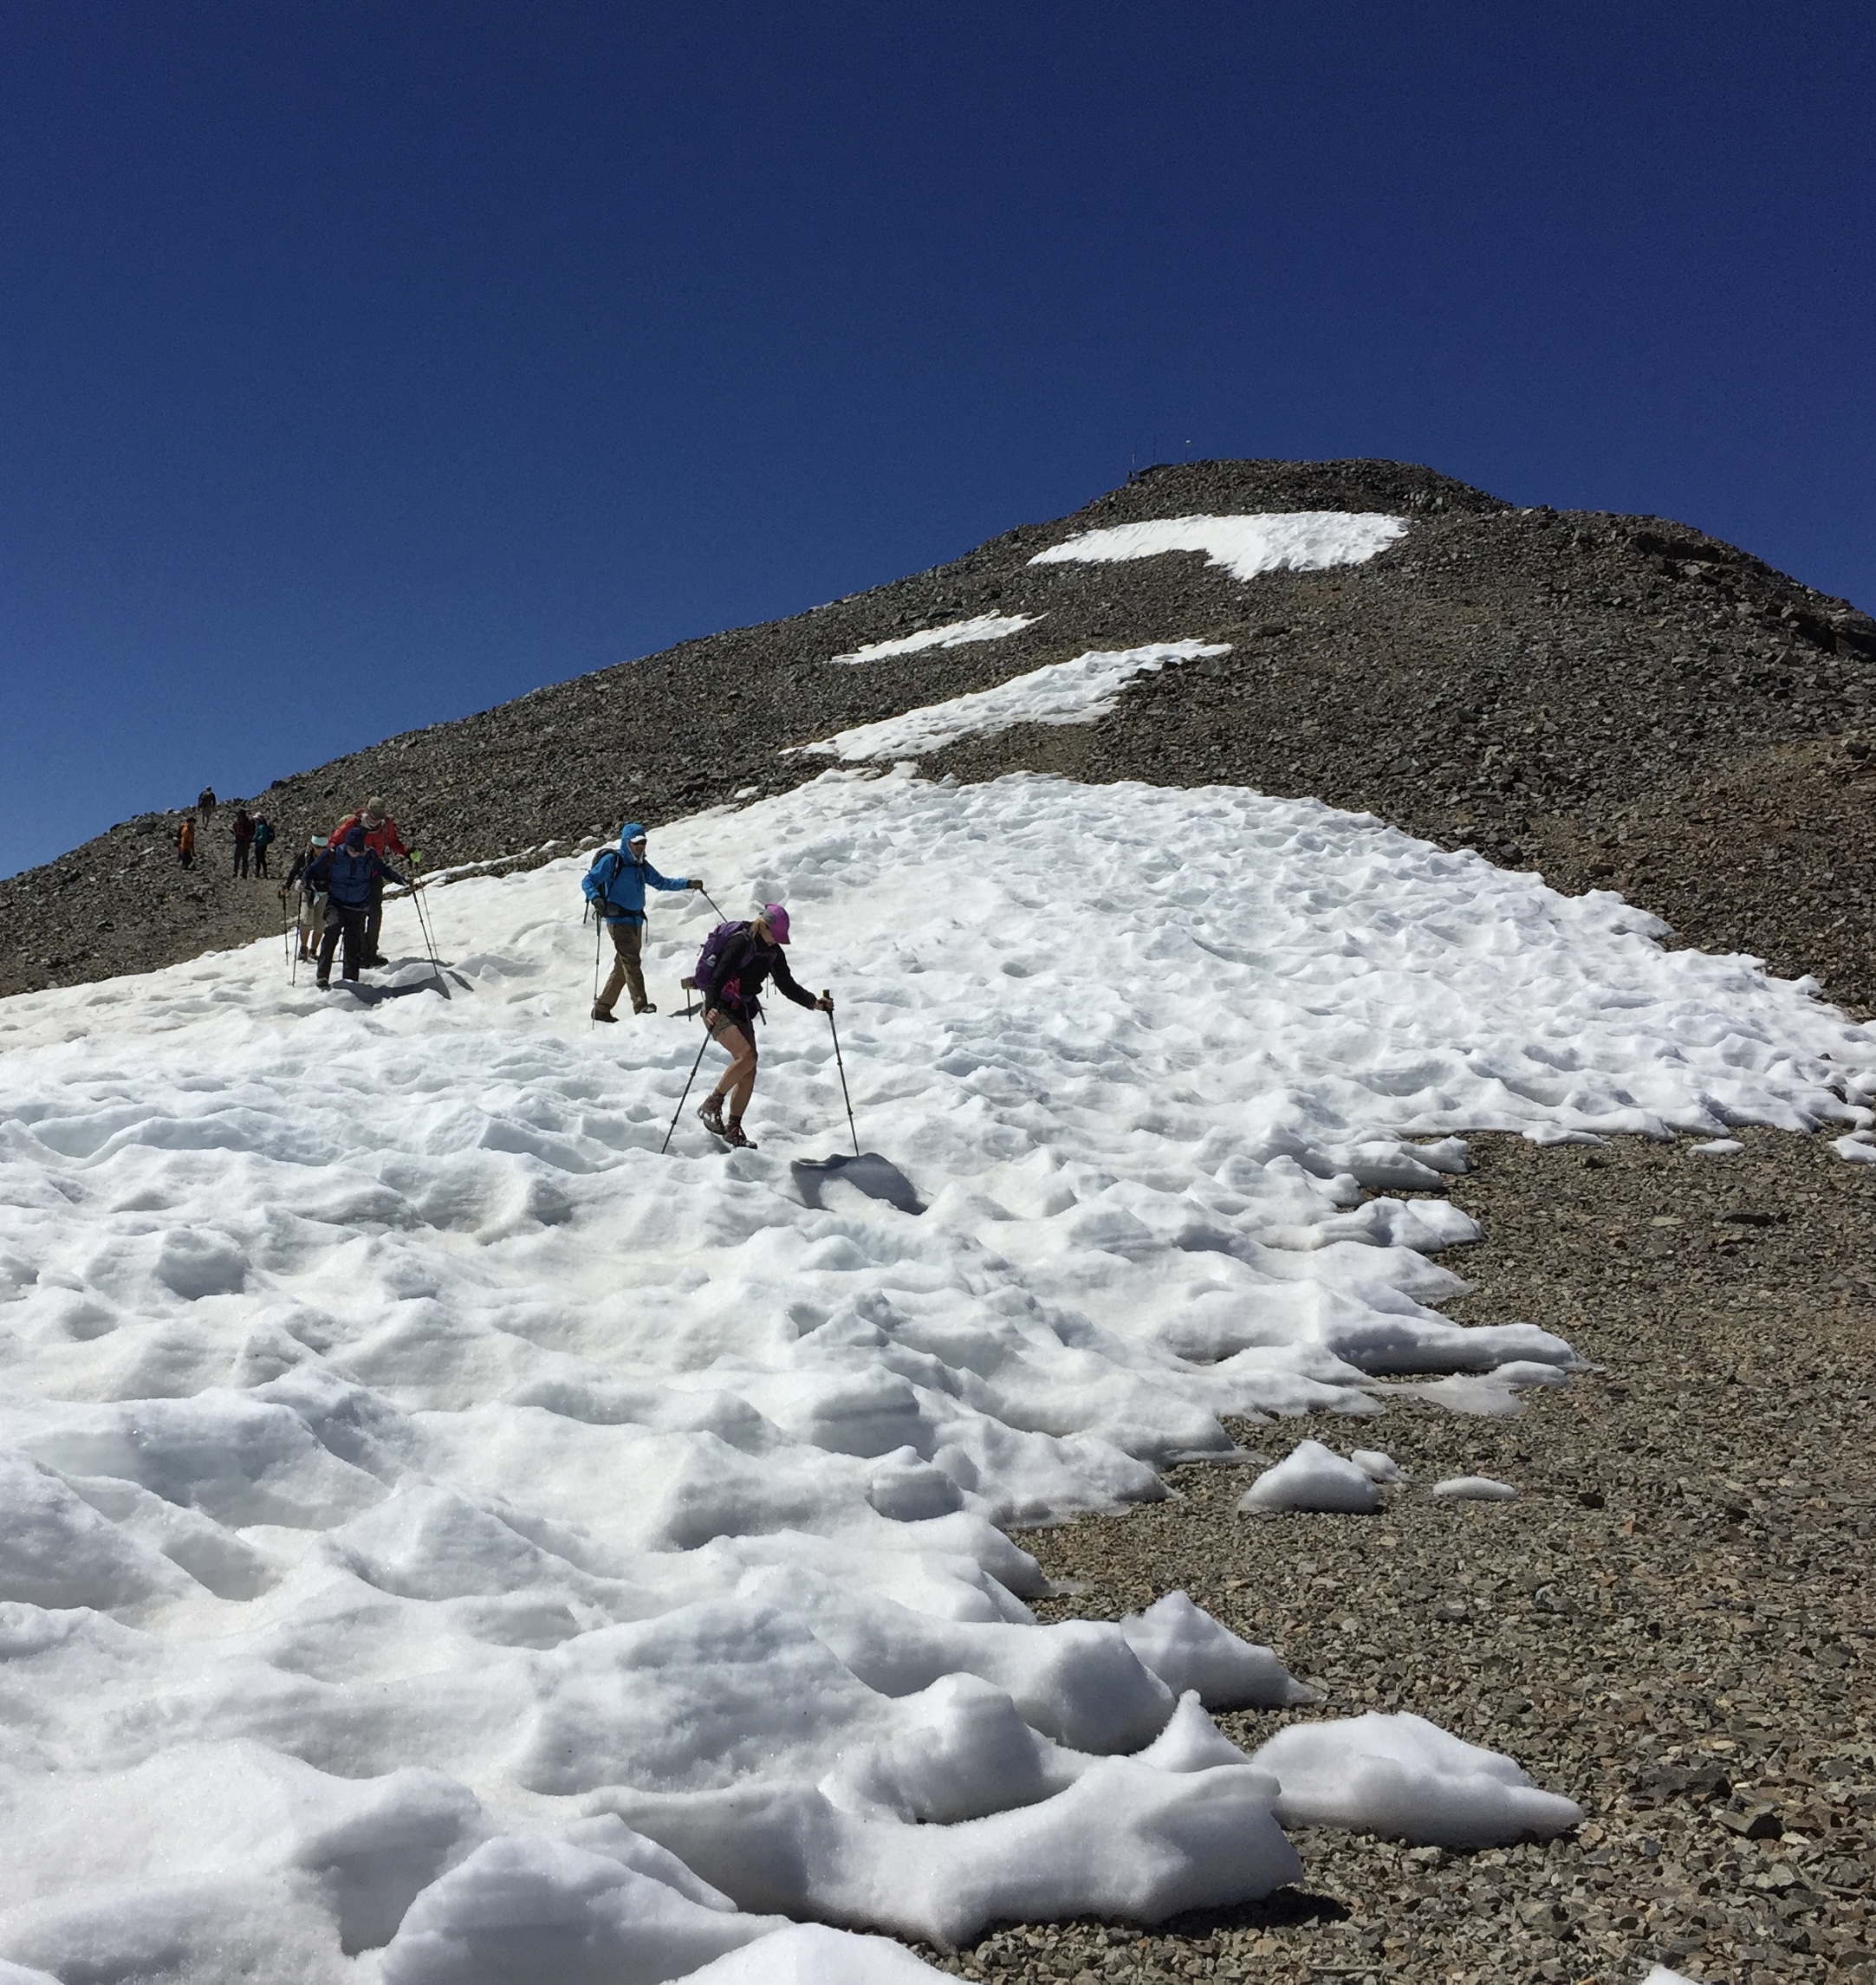 A Sierra Nevada adventure is traversing sun-cupped snowfields on the way down White Mountain Peak